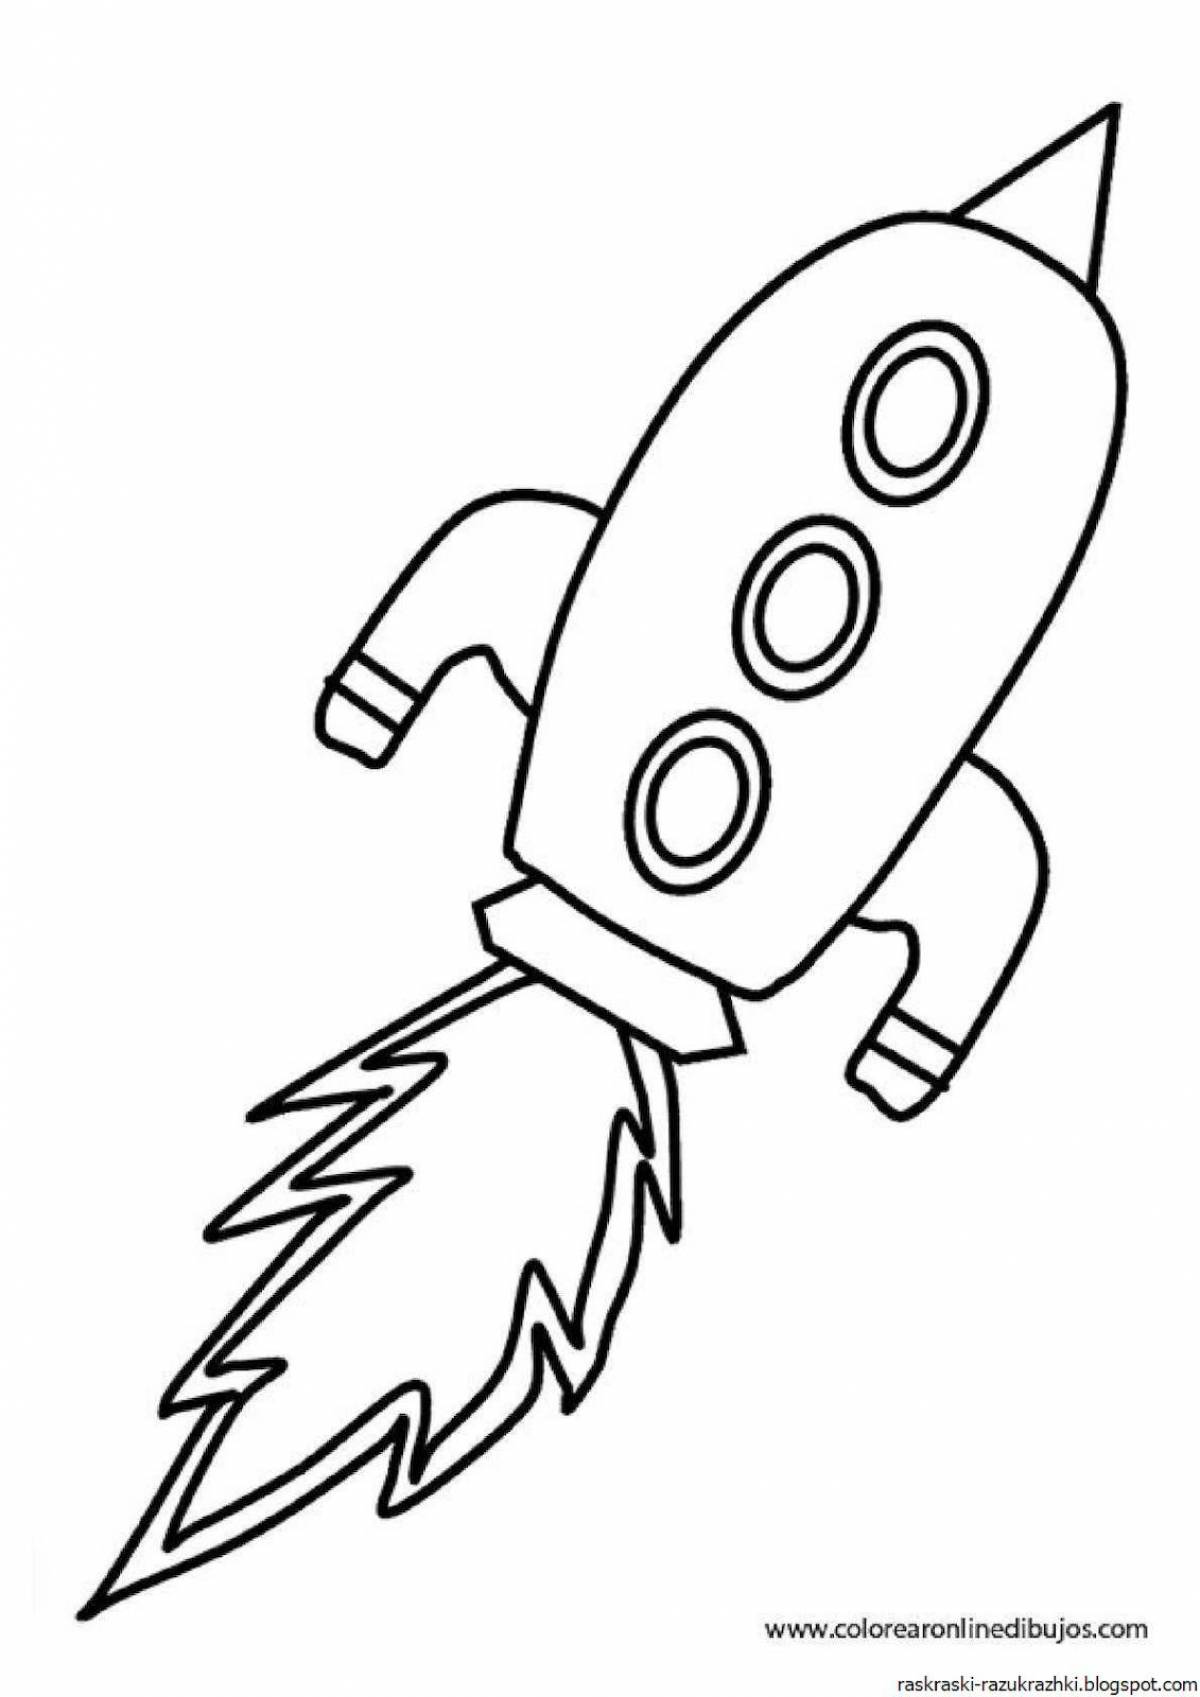 Fun rocket coloring book for kids